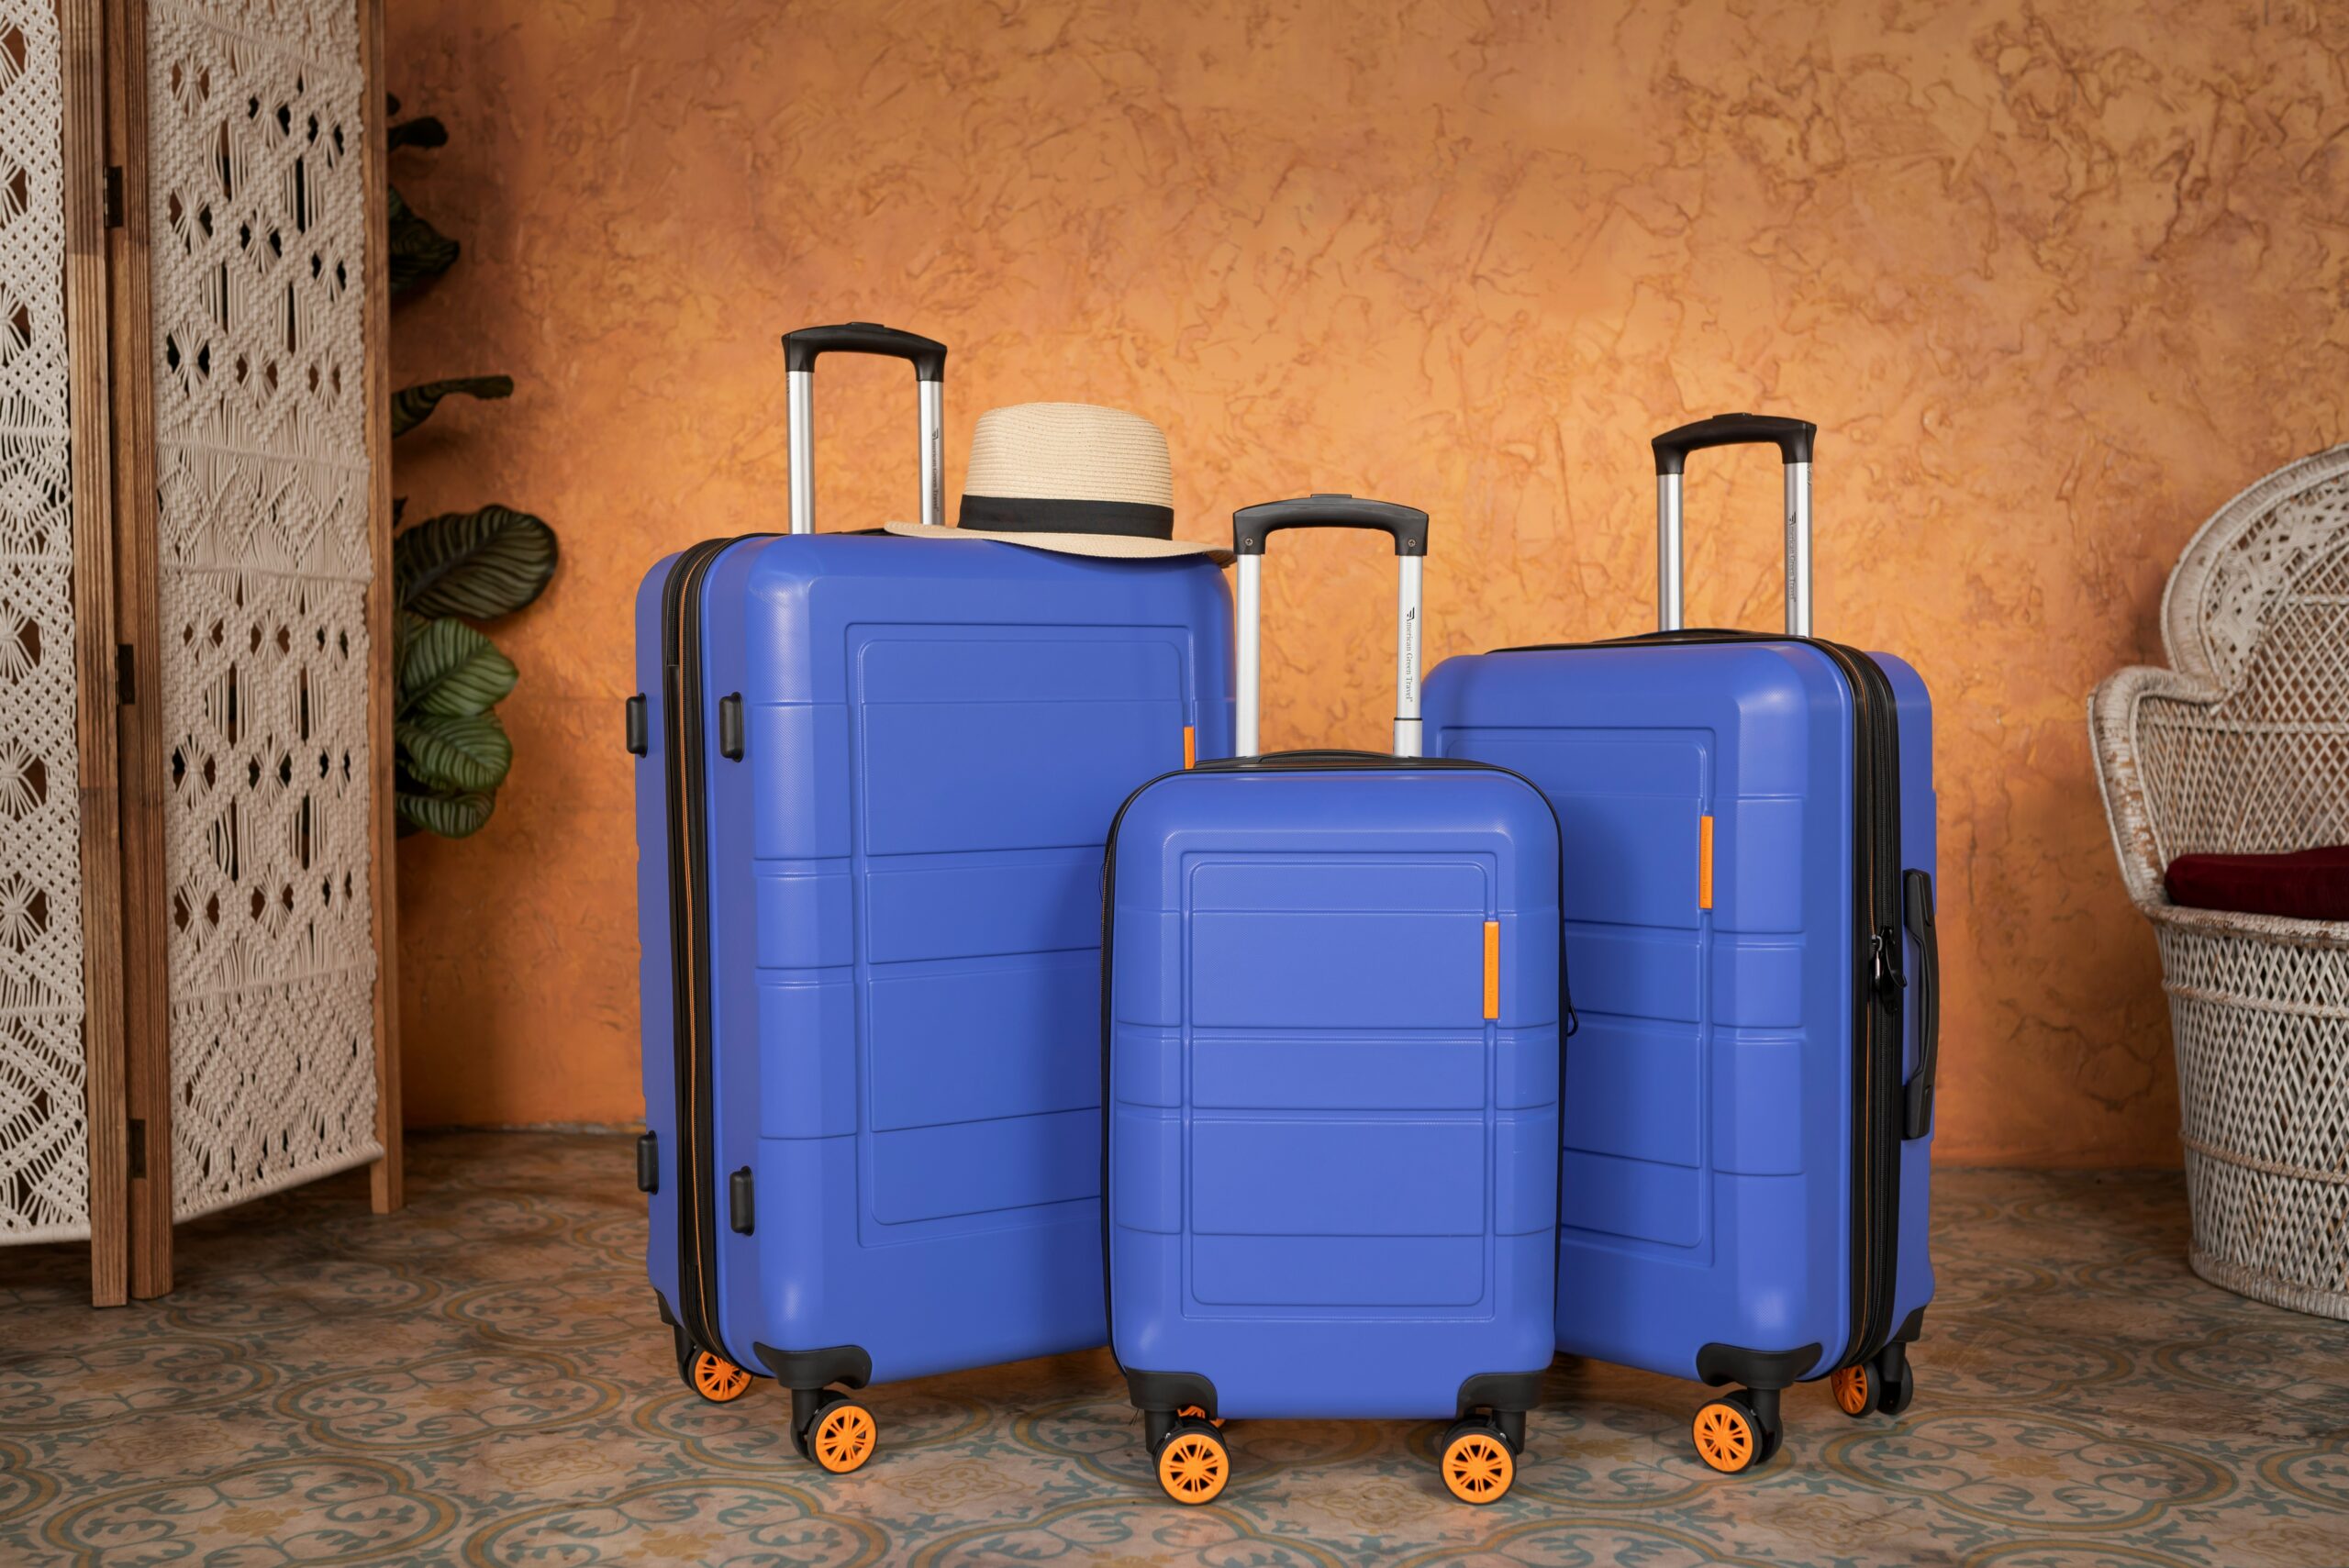 3 blue suitcases